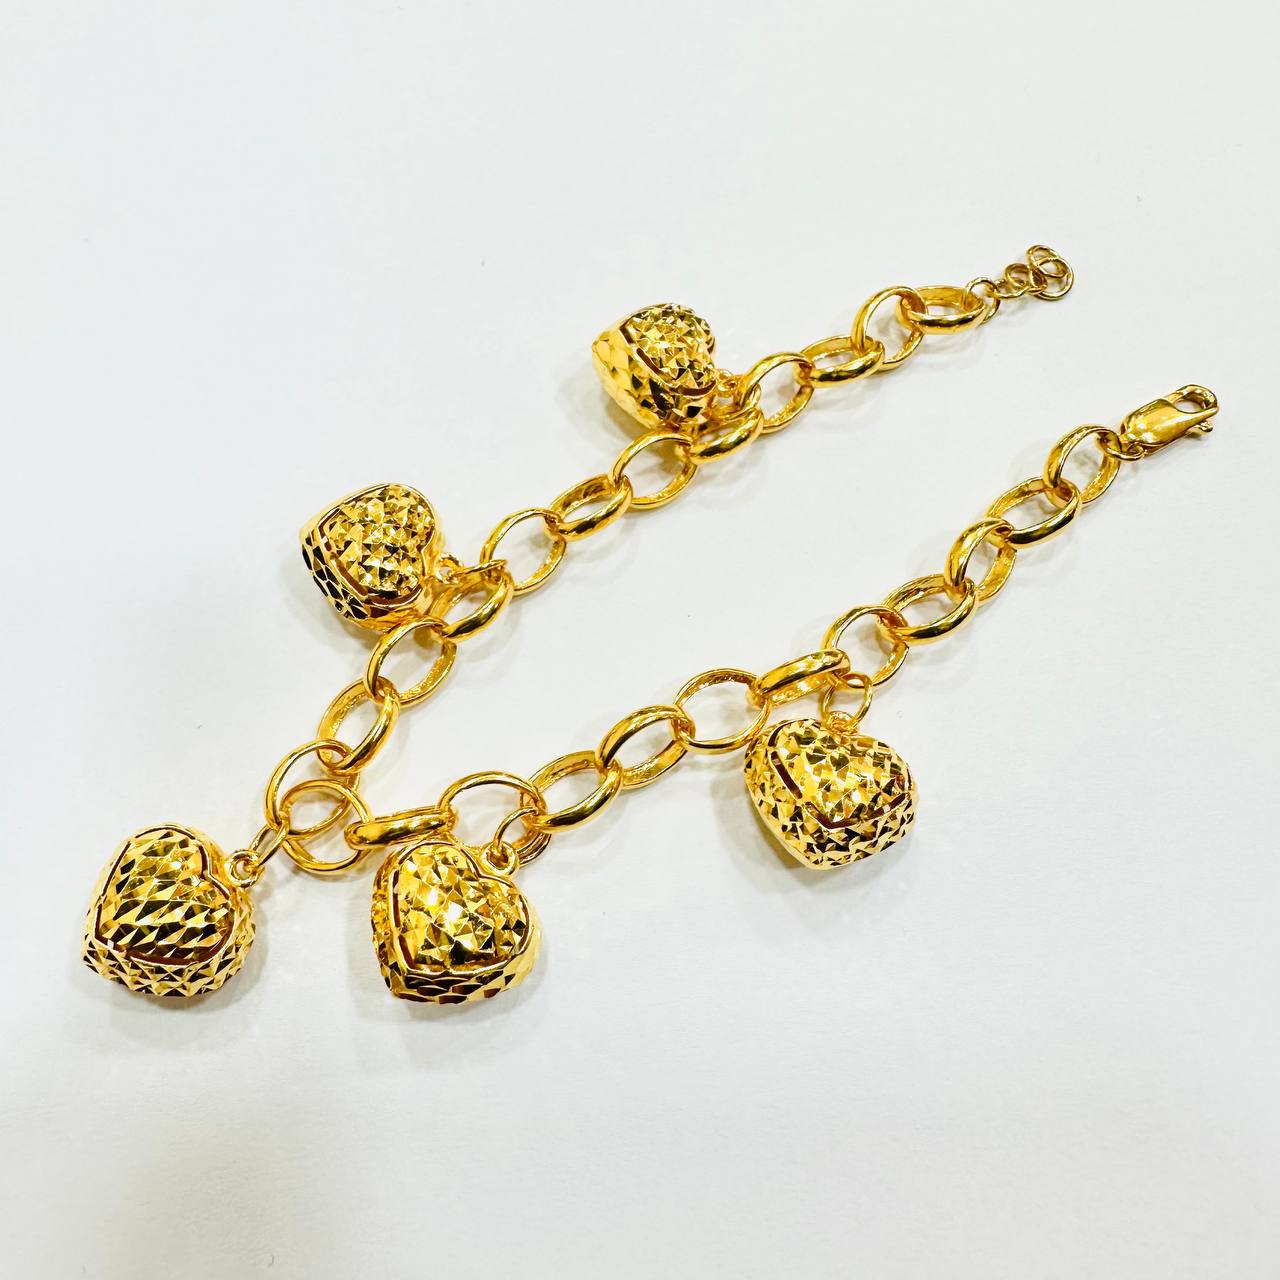 22k / 916 Gold Dangling heart bracelet (big heart) By Best Gold Shop-916 gold-Best Gold Shop